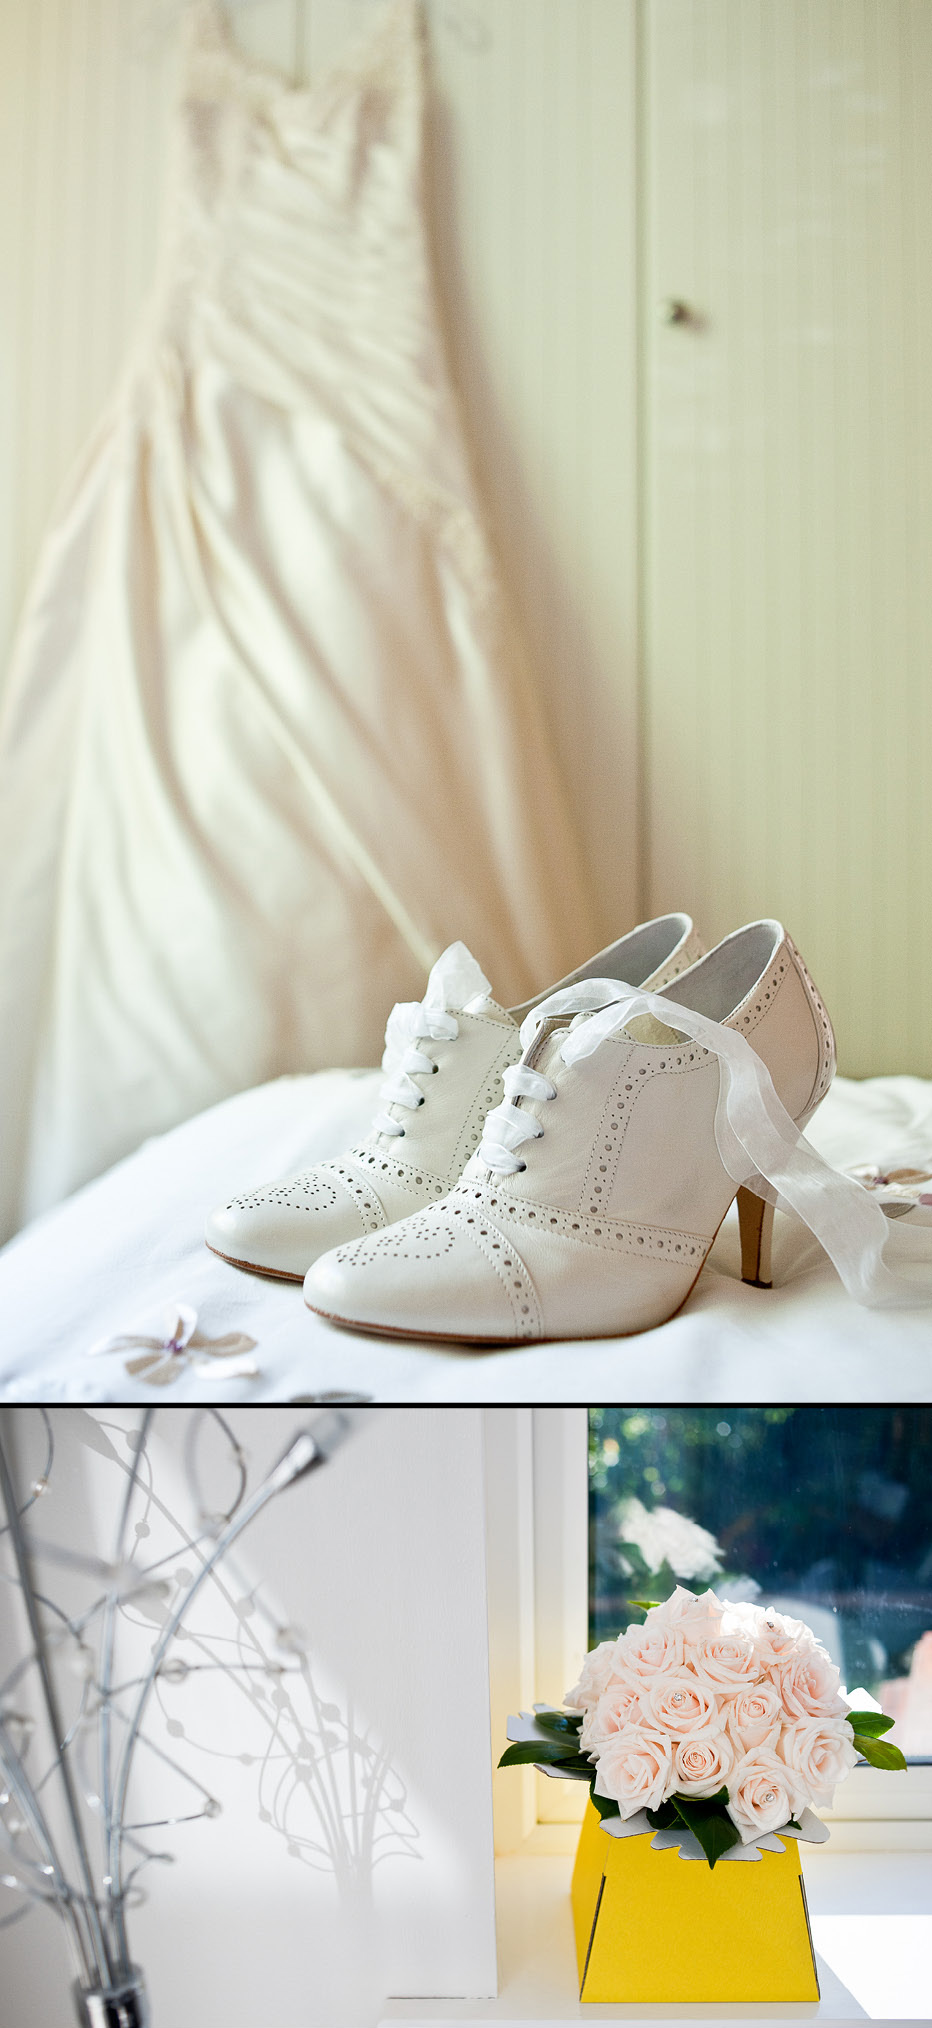 Bridal dress and shoes, Dorset